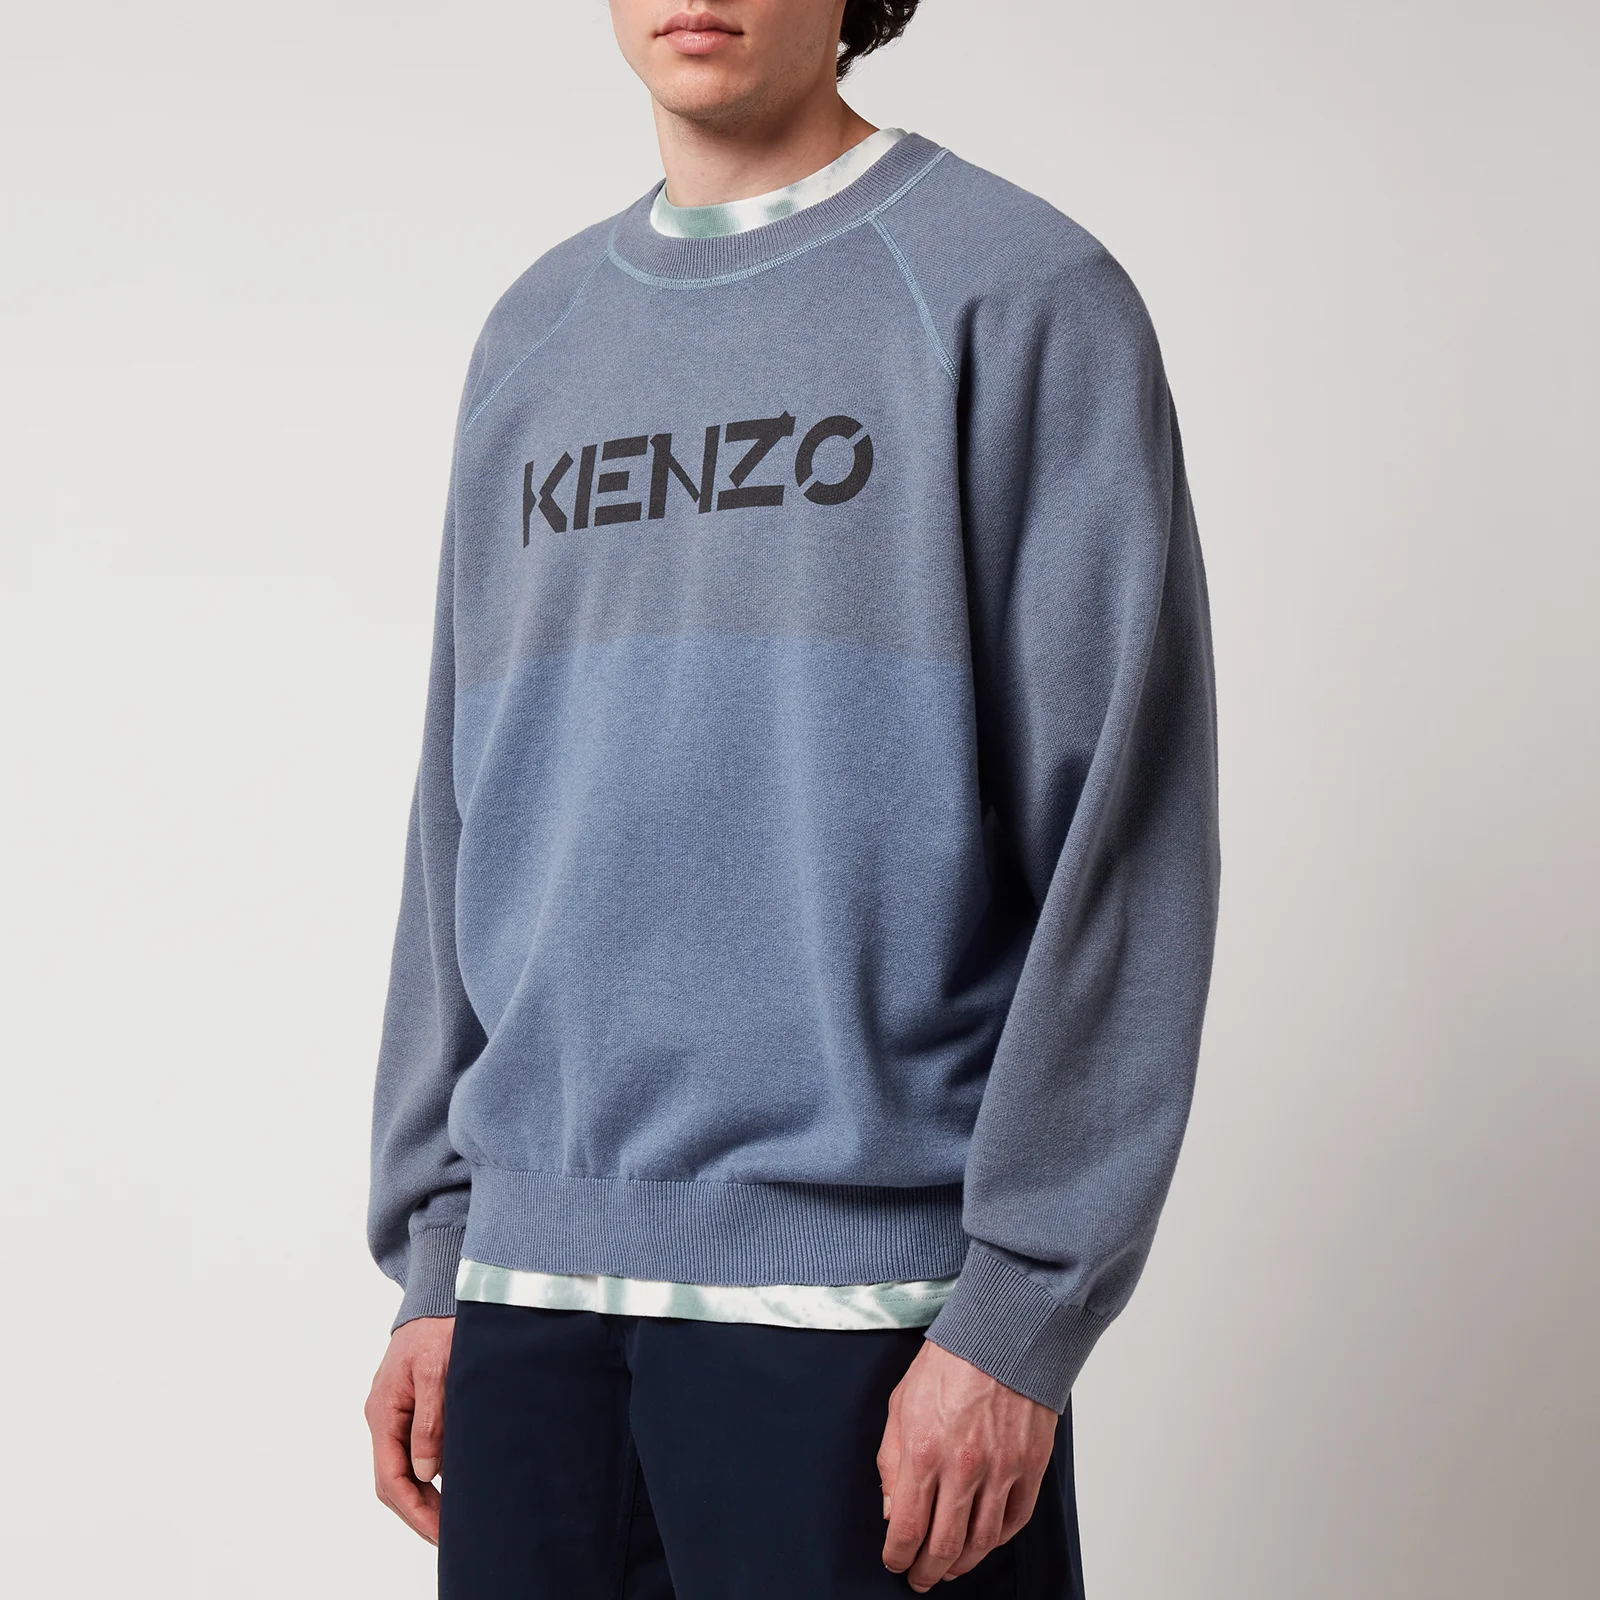 KENZO Men's Kenzo Logo Garment Dye Jumper - Glacier Image 1